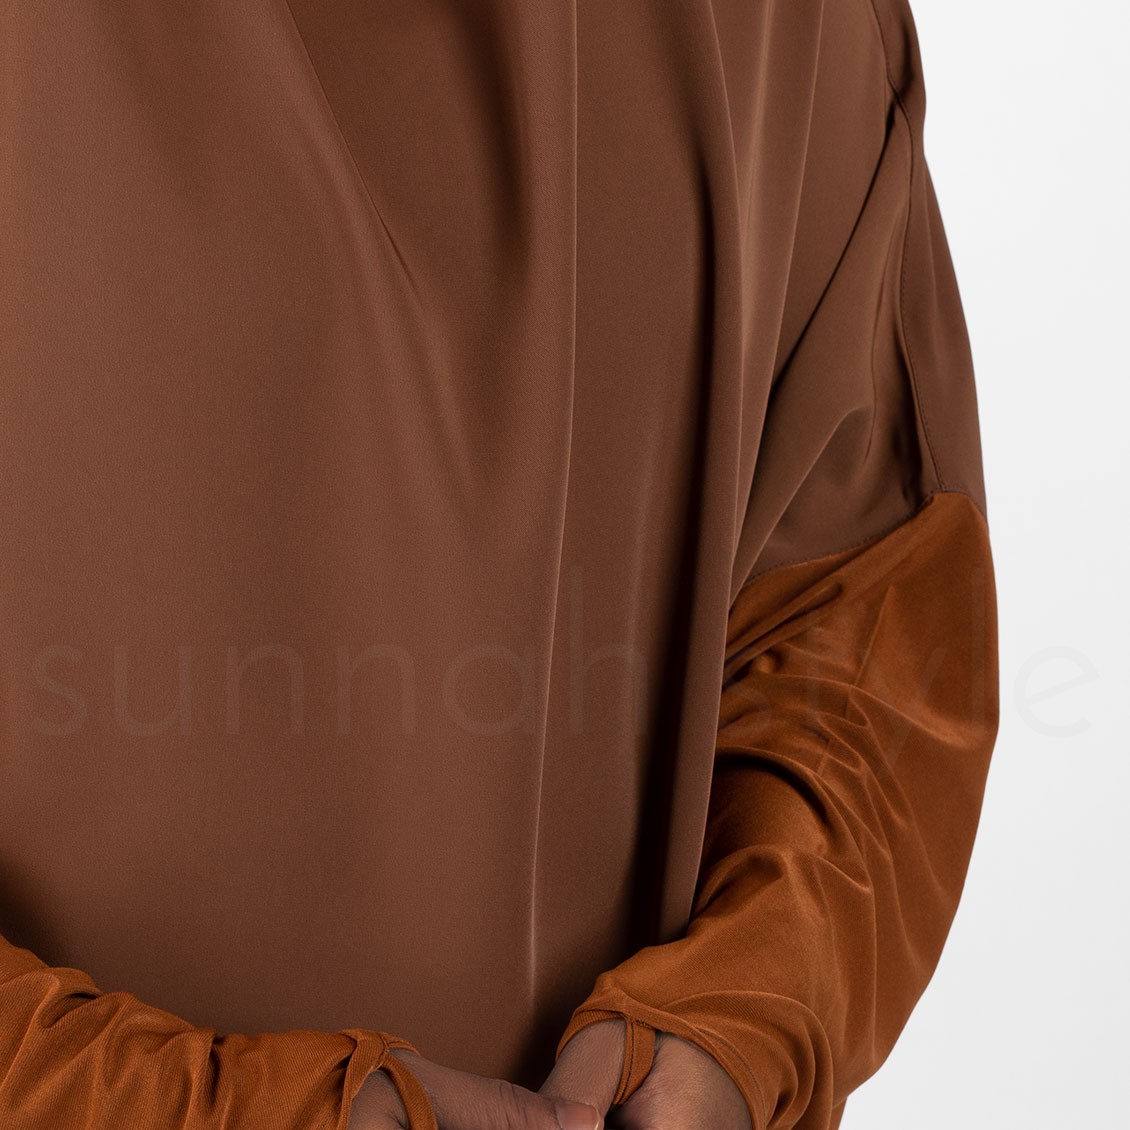 Sunnah Style Signature Full Length Jilbab Russet Brown